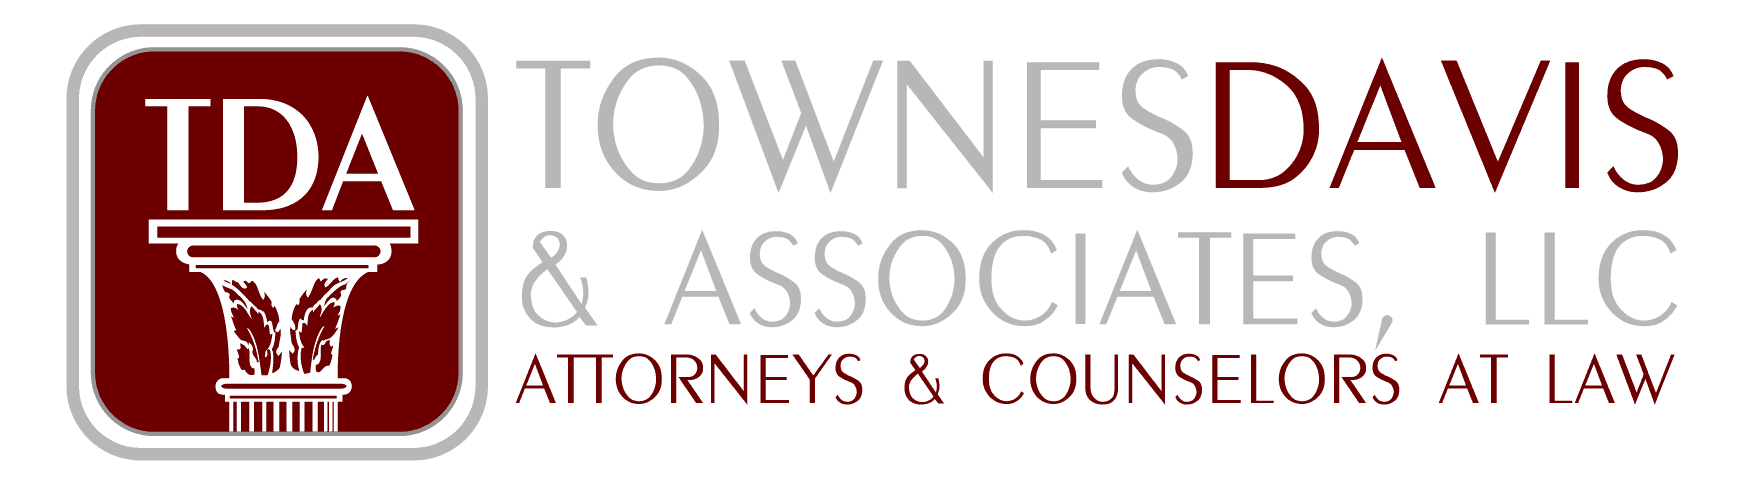 Townes Davis & Associates, LLC - LOGO